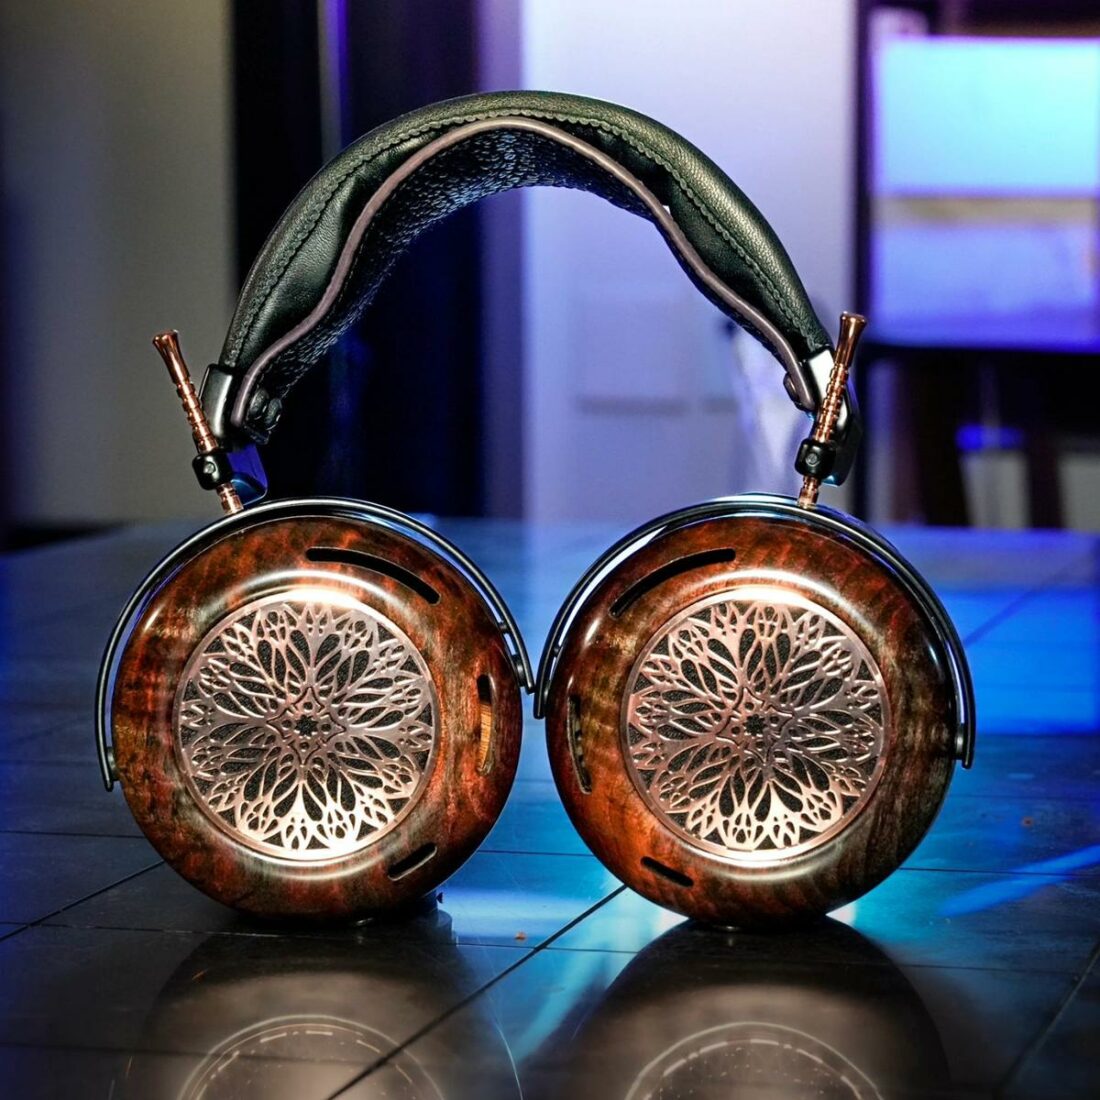 Atrium Stabilized Headphones. (From: ZMF Headphones)